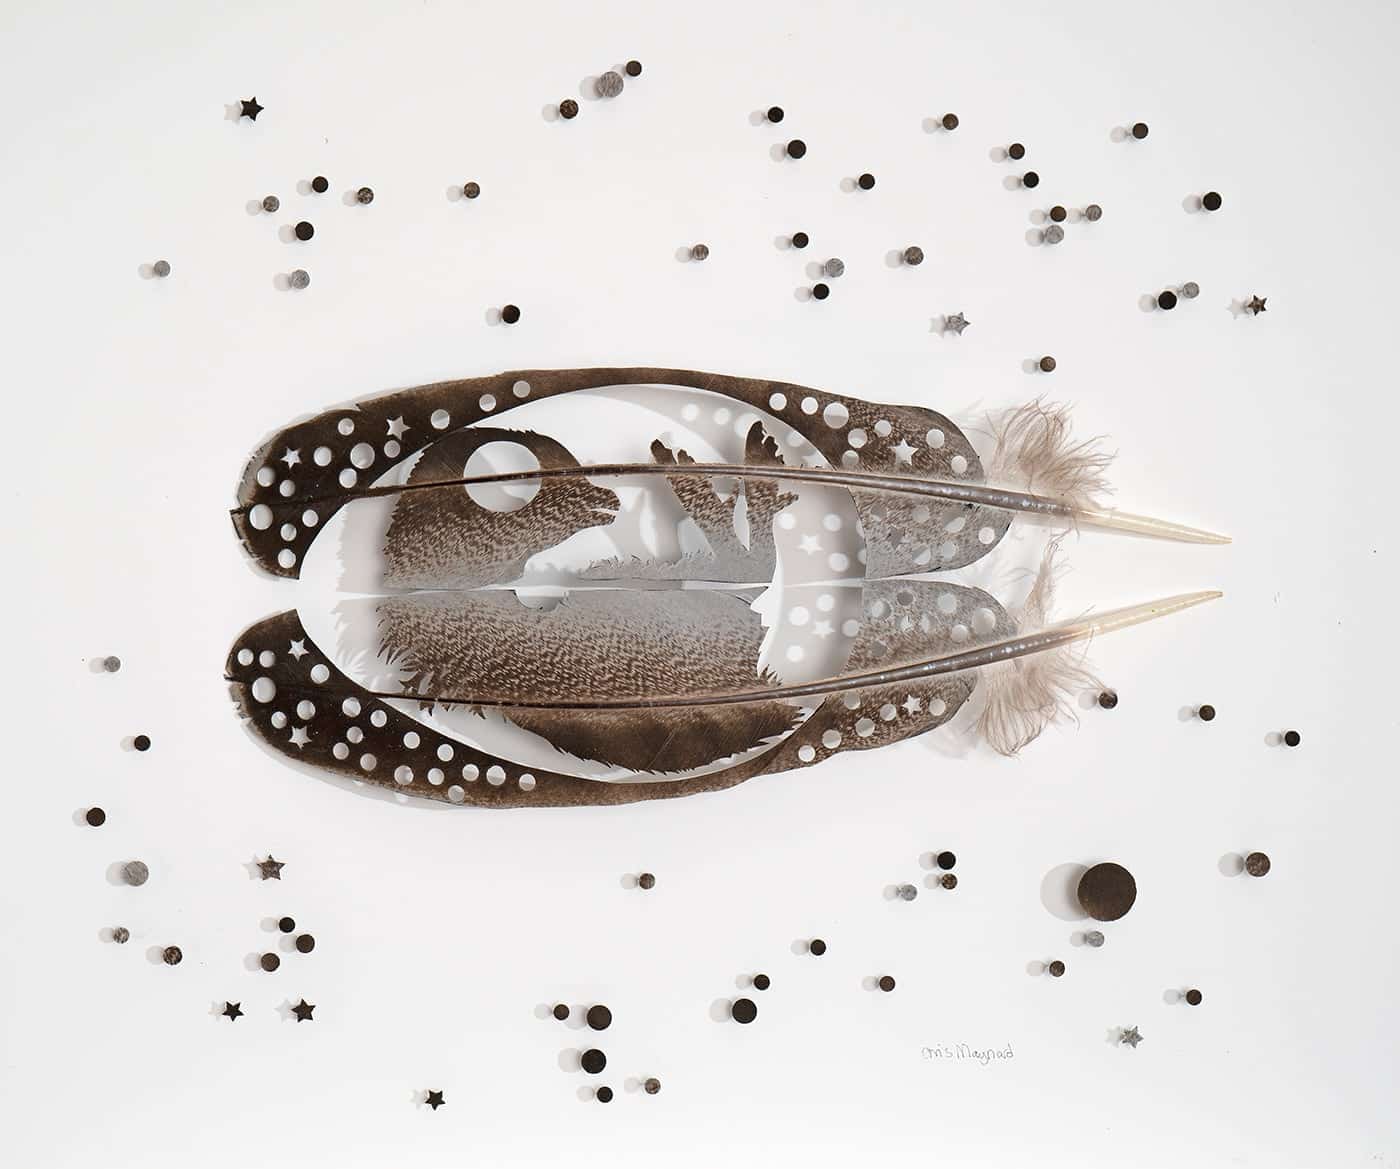 embrion hecho en plumas talladas por el artista Chris Maynard